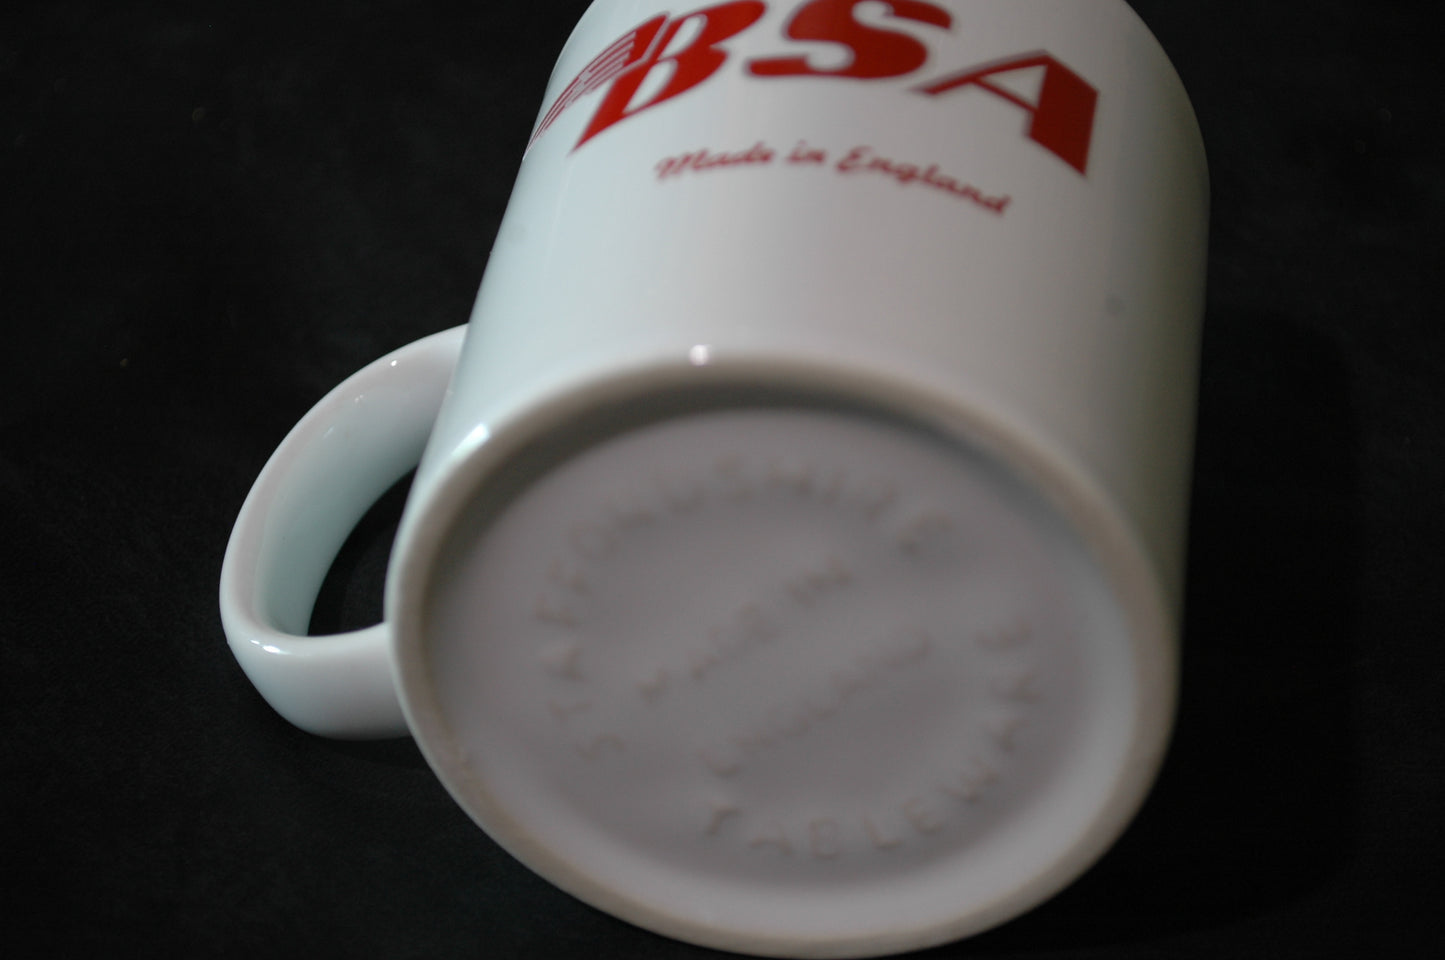 BSA Mug made in UK